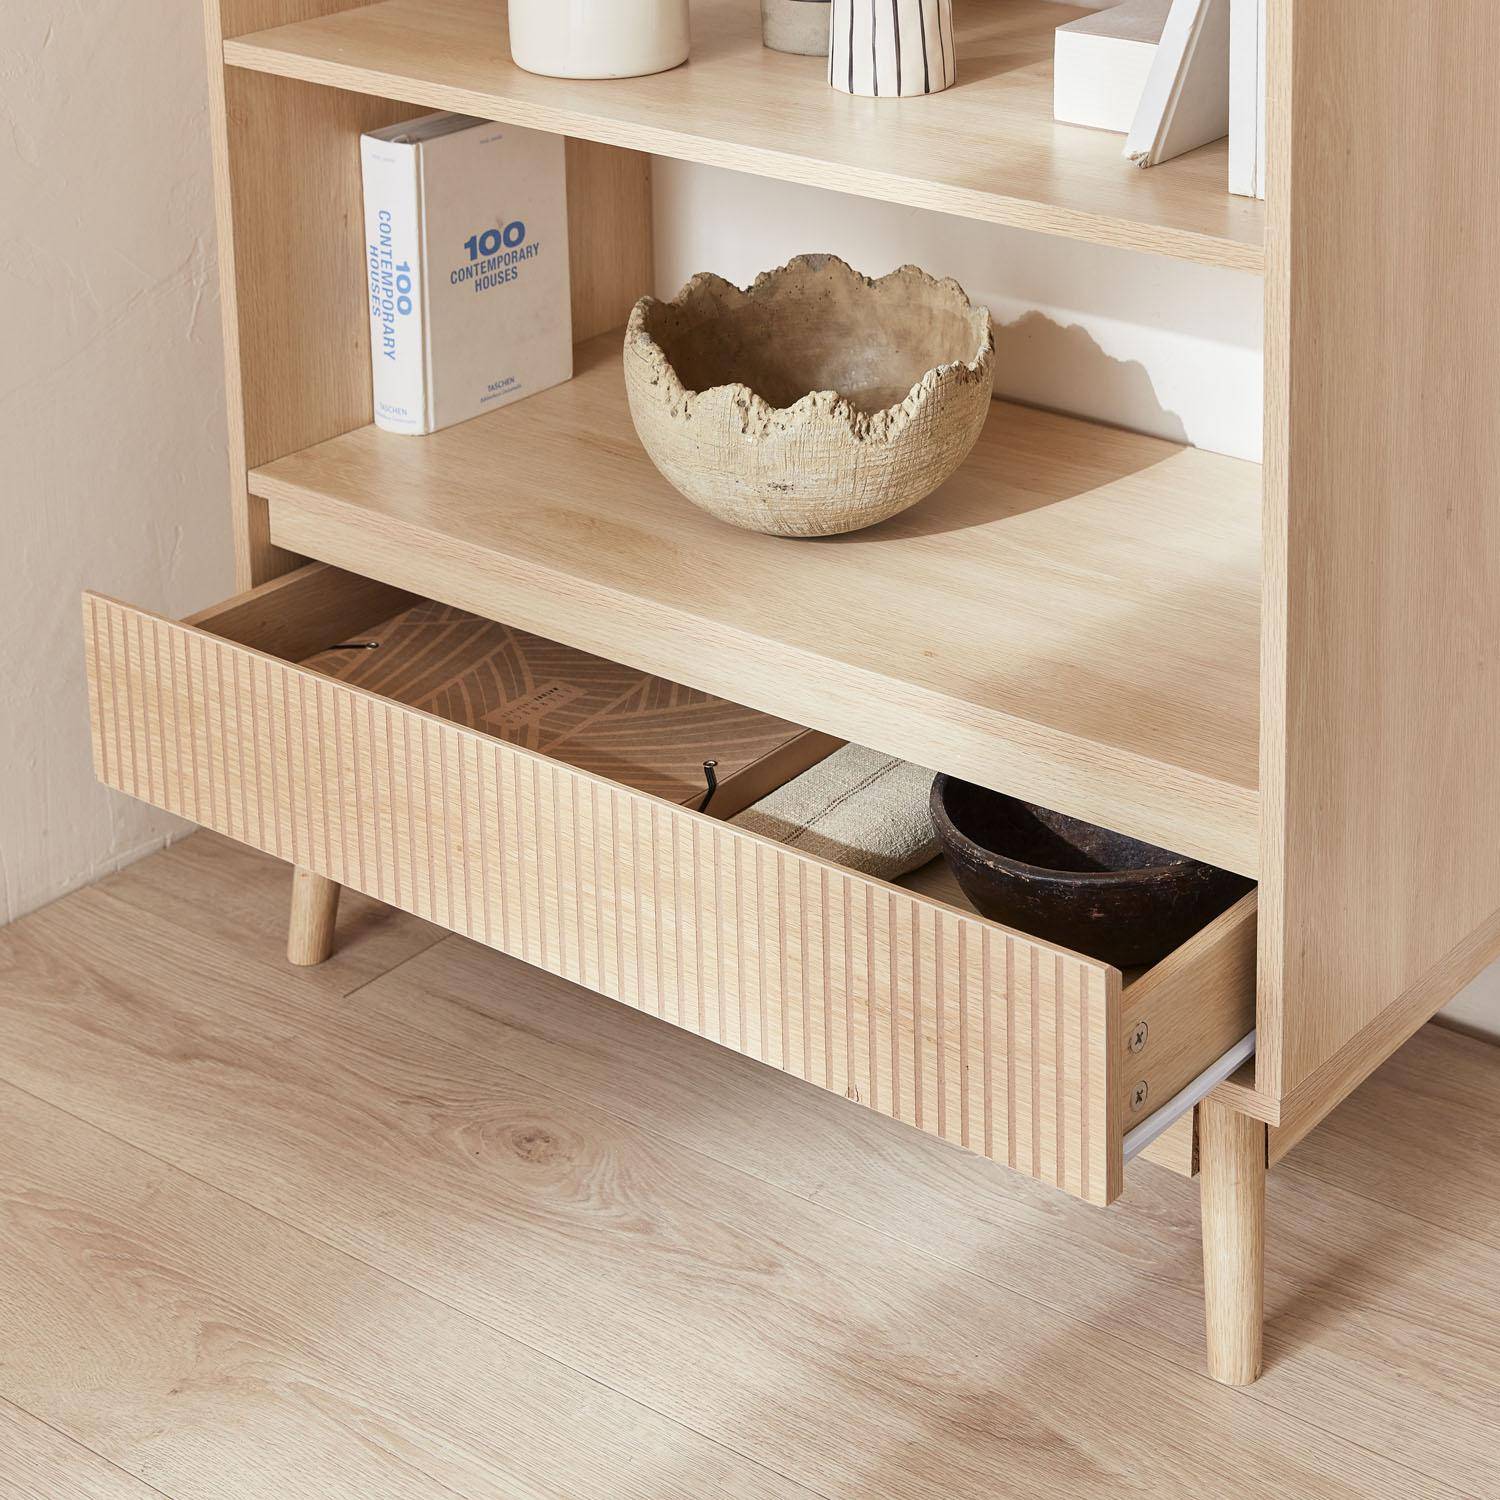 3-level bookshelf with drawer, wood decor, L80xW39.5xH120cm,sweeek,Photo2